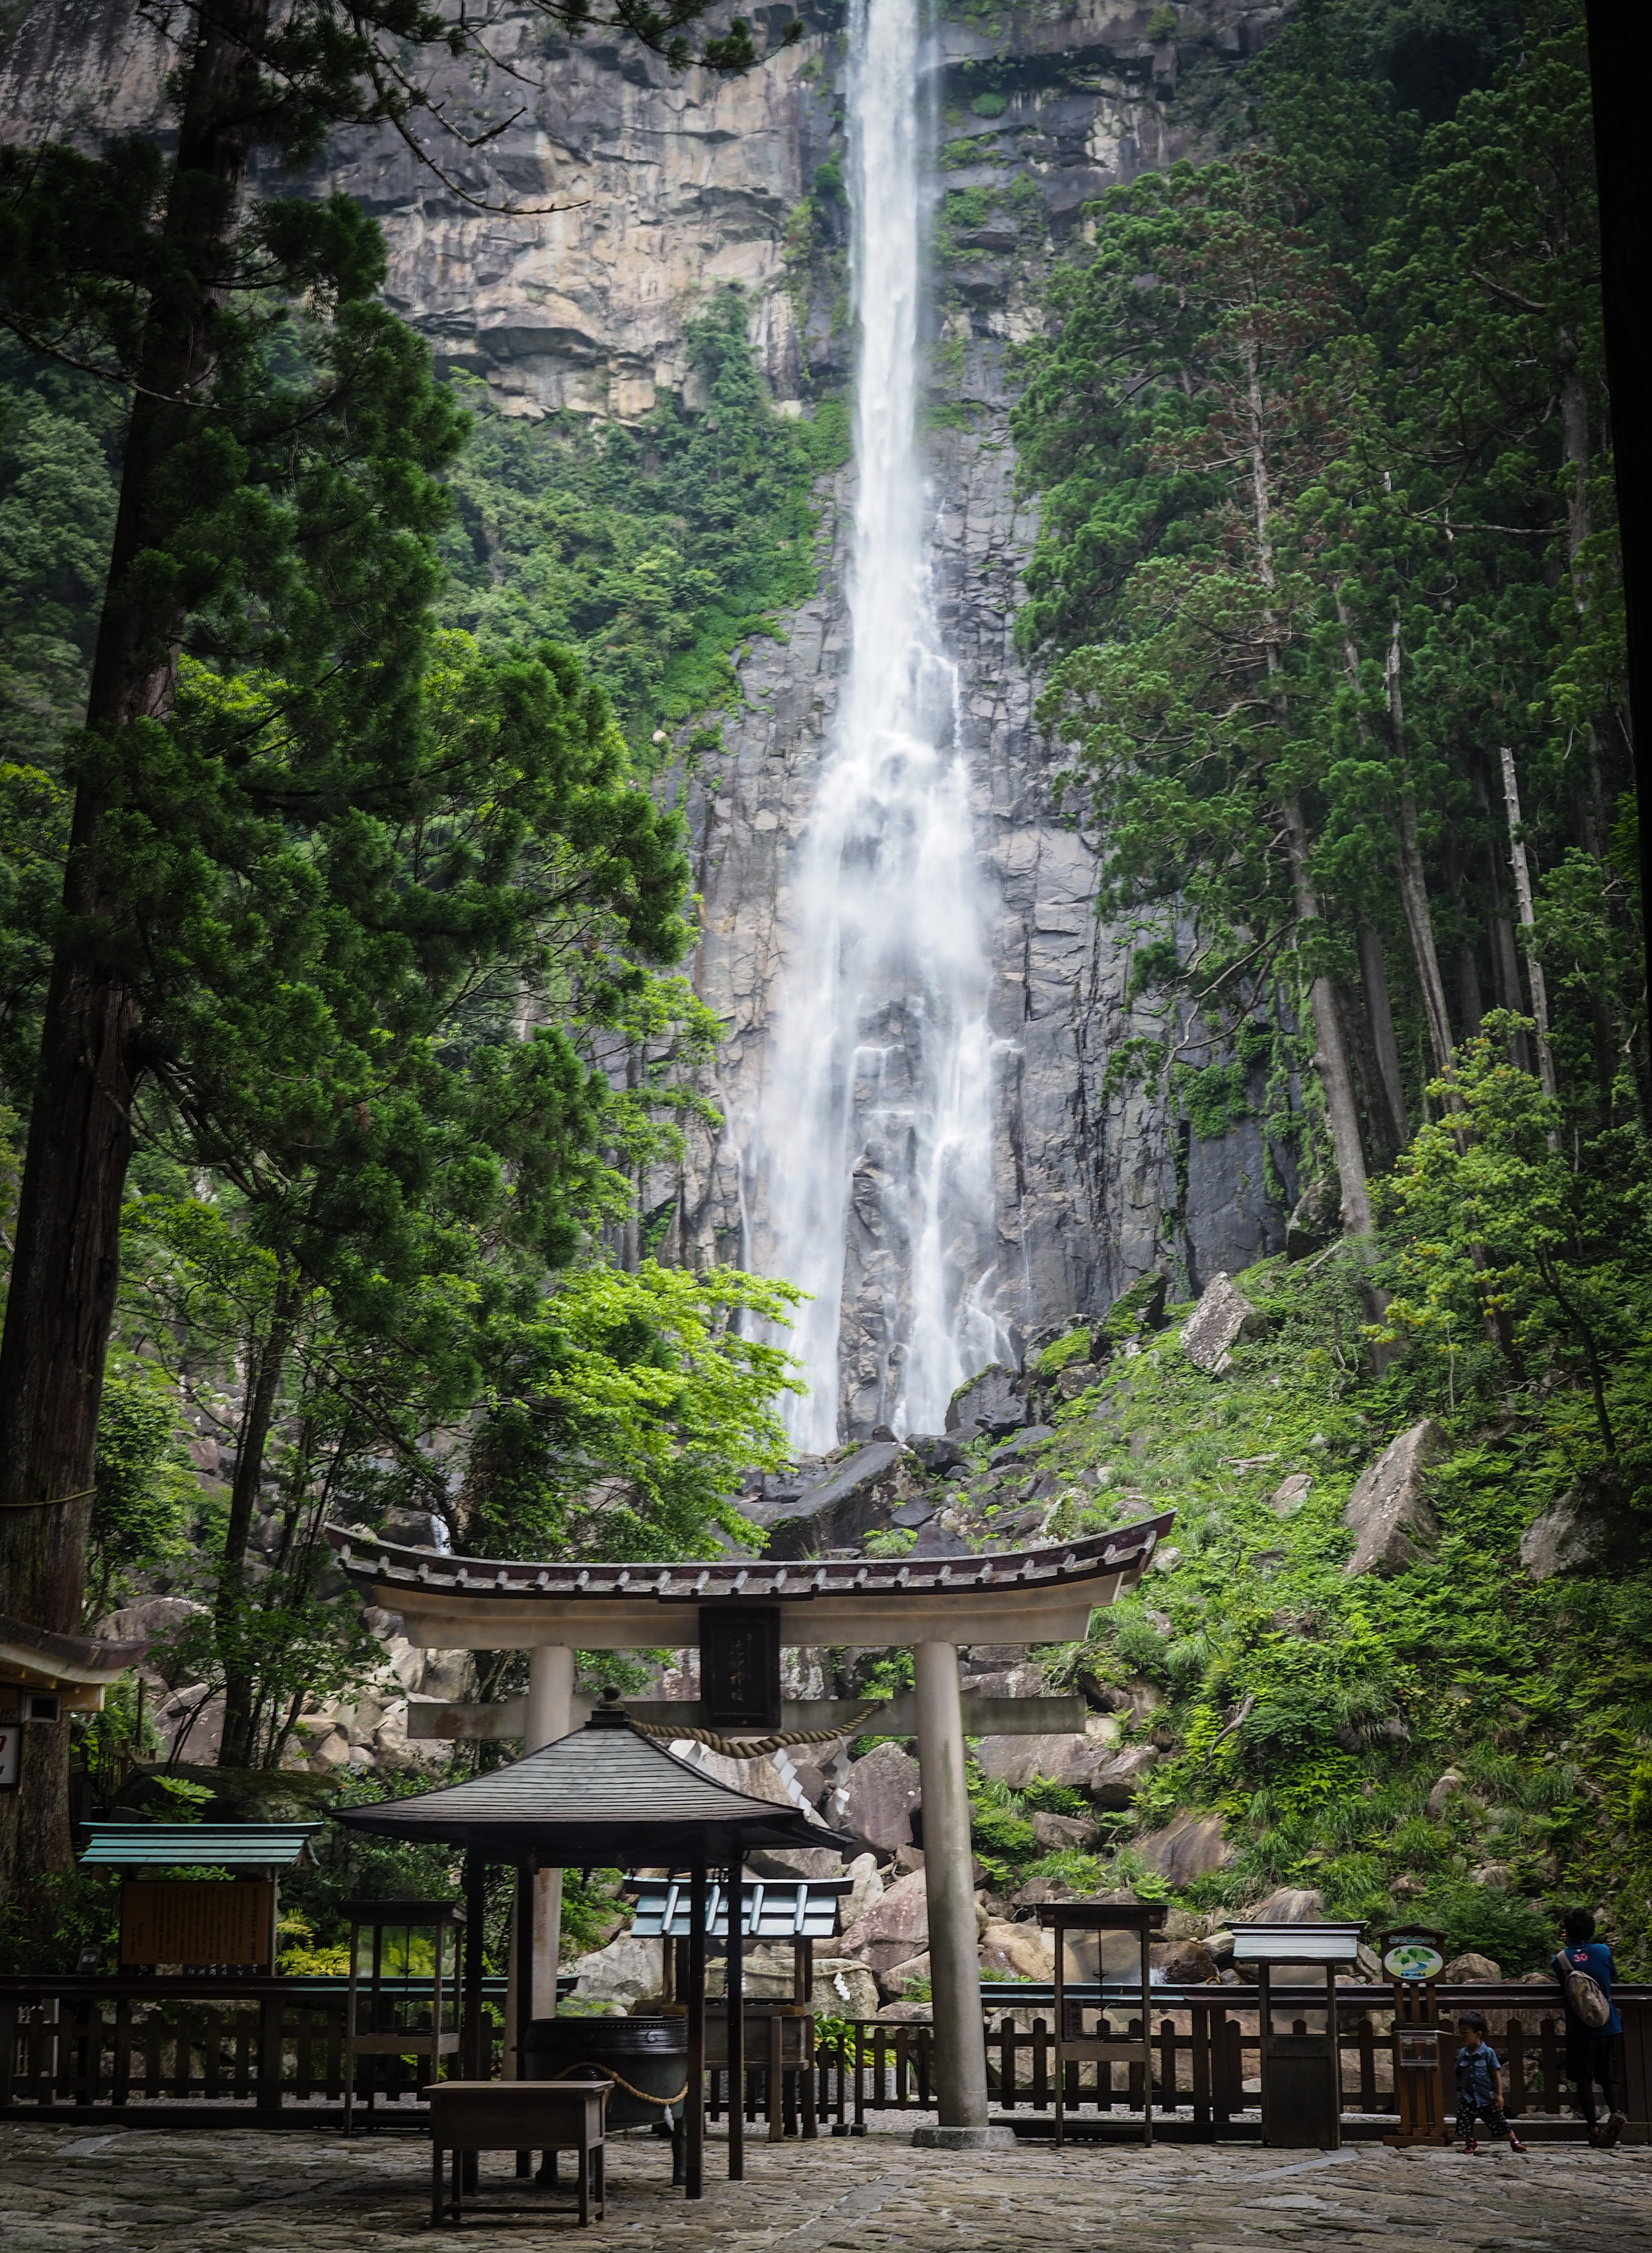 Nachi Falls, the tallest waterfall in Japan